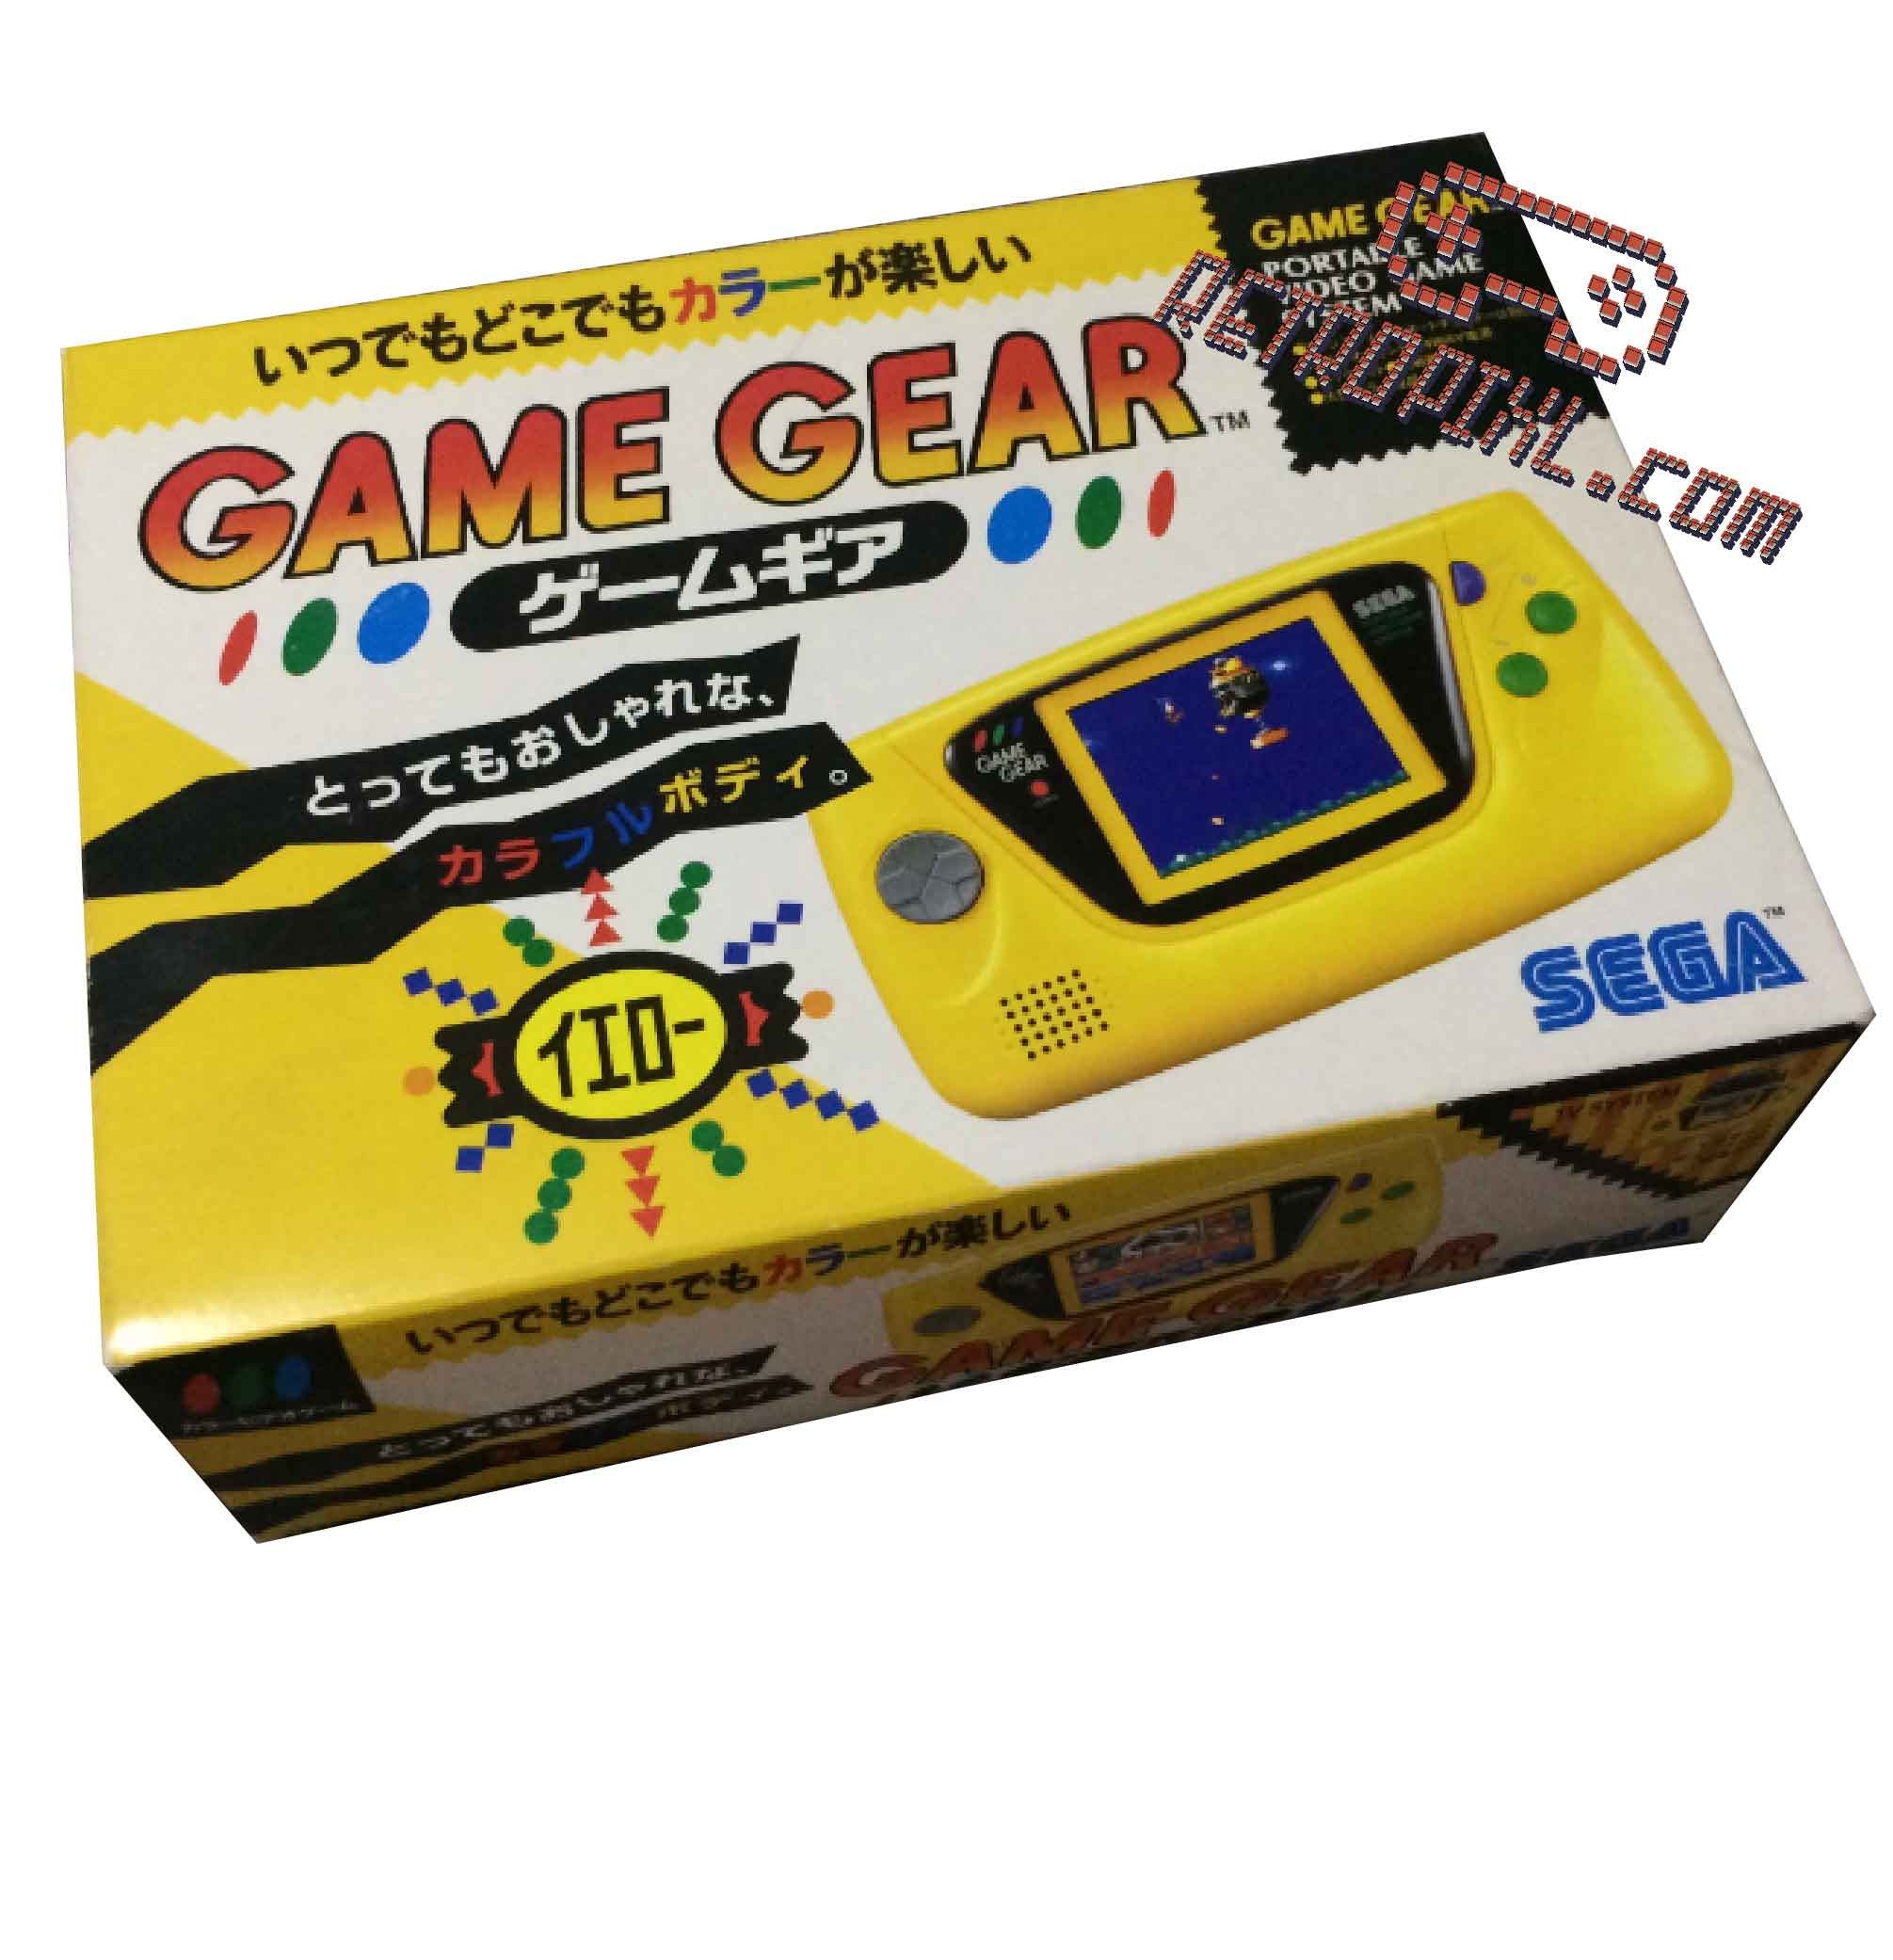 Retro Gaming – Game Gear